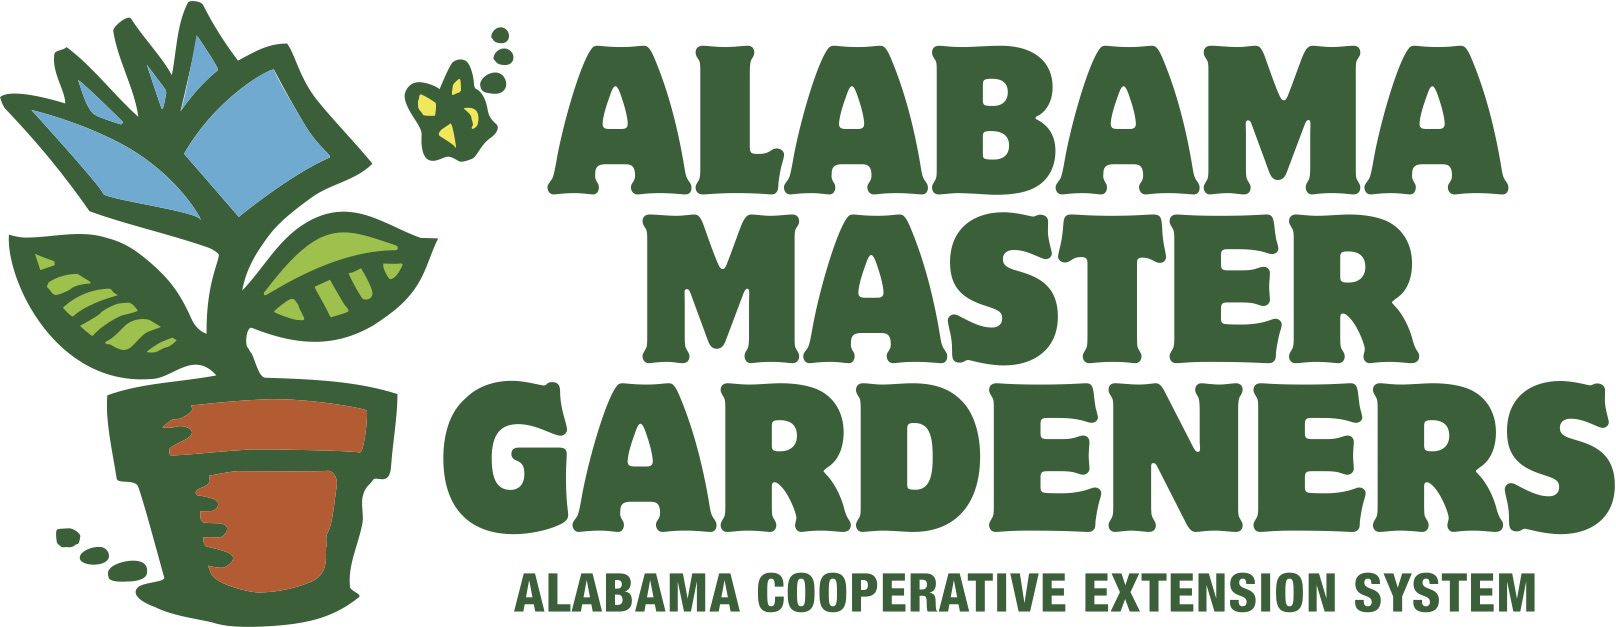 download the last version for mac Alabama gardener installer license prep class